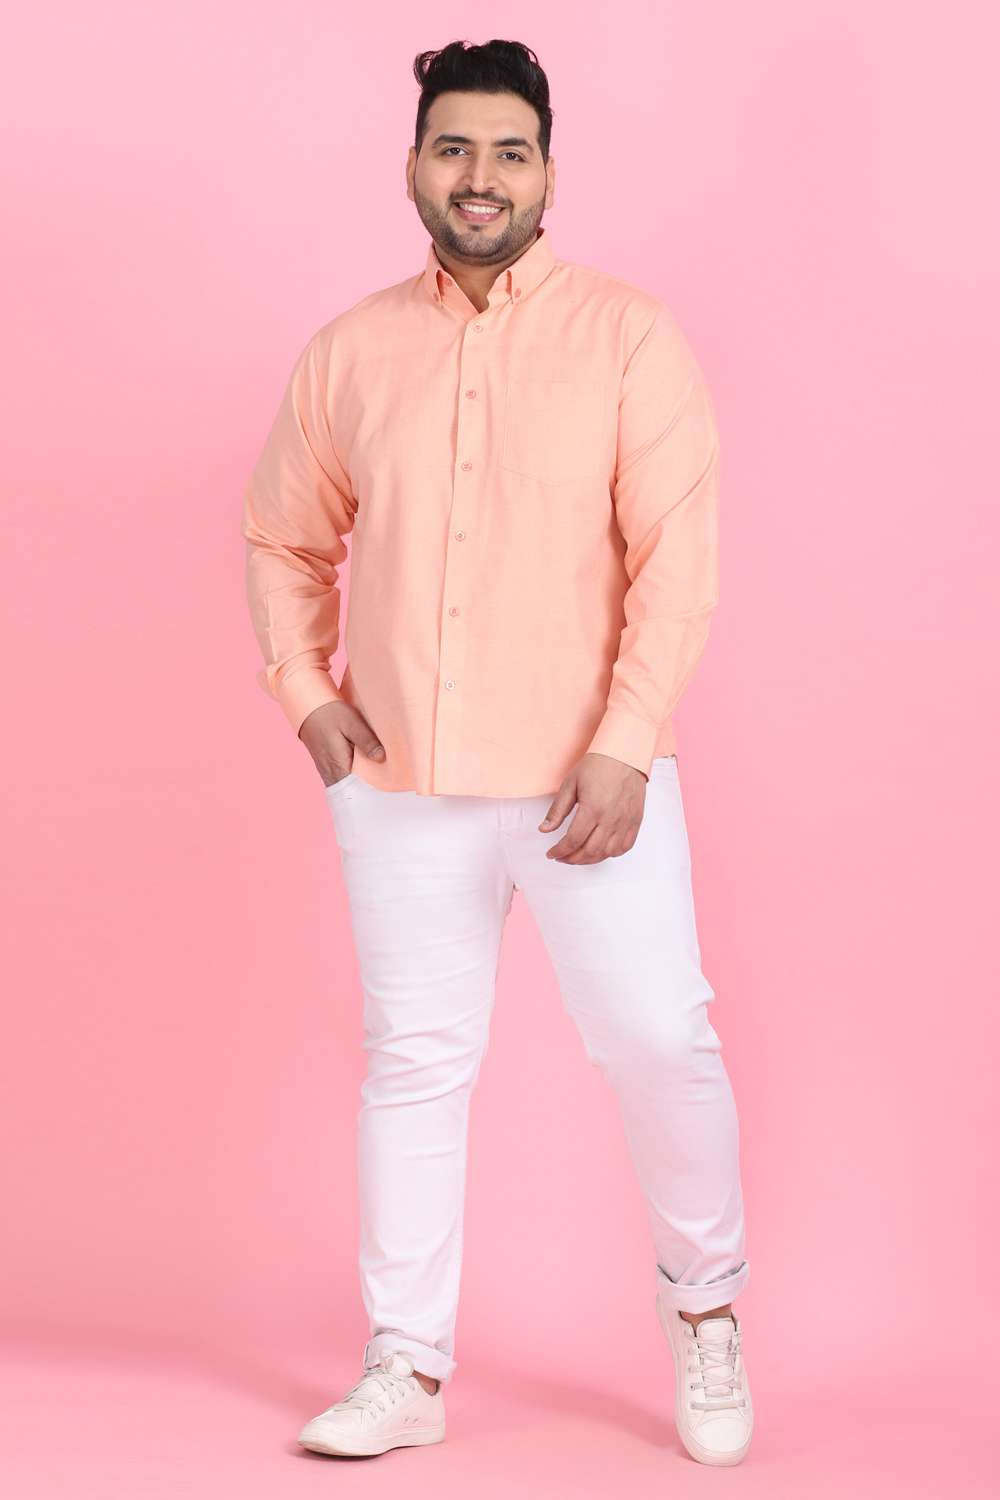 Lastinch Men Plus Size Formal Orange Stripes Shirt (36) 